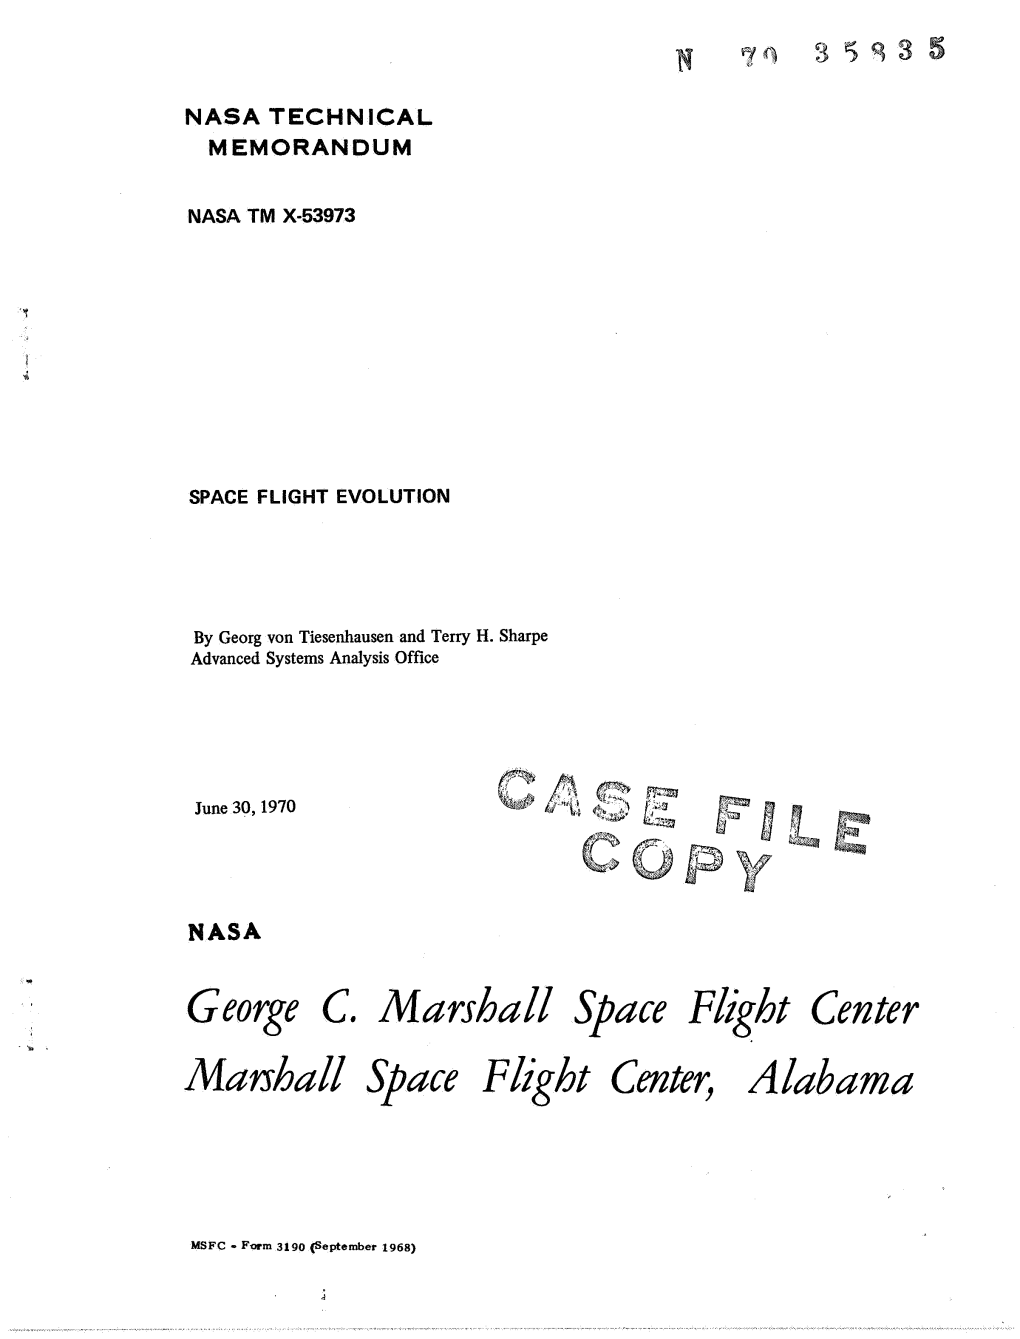 George C. Marshall Space Flight Center Malshall Space Flight Center, Alabama